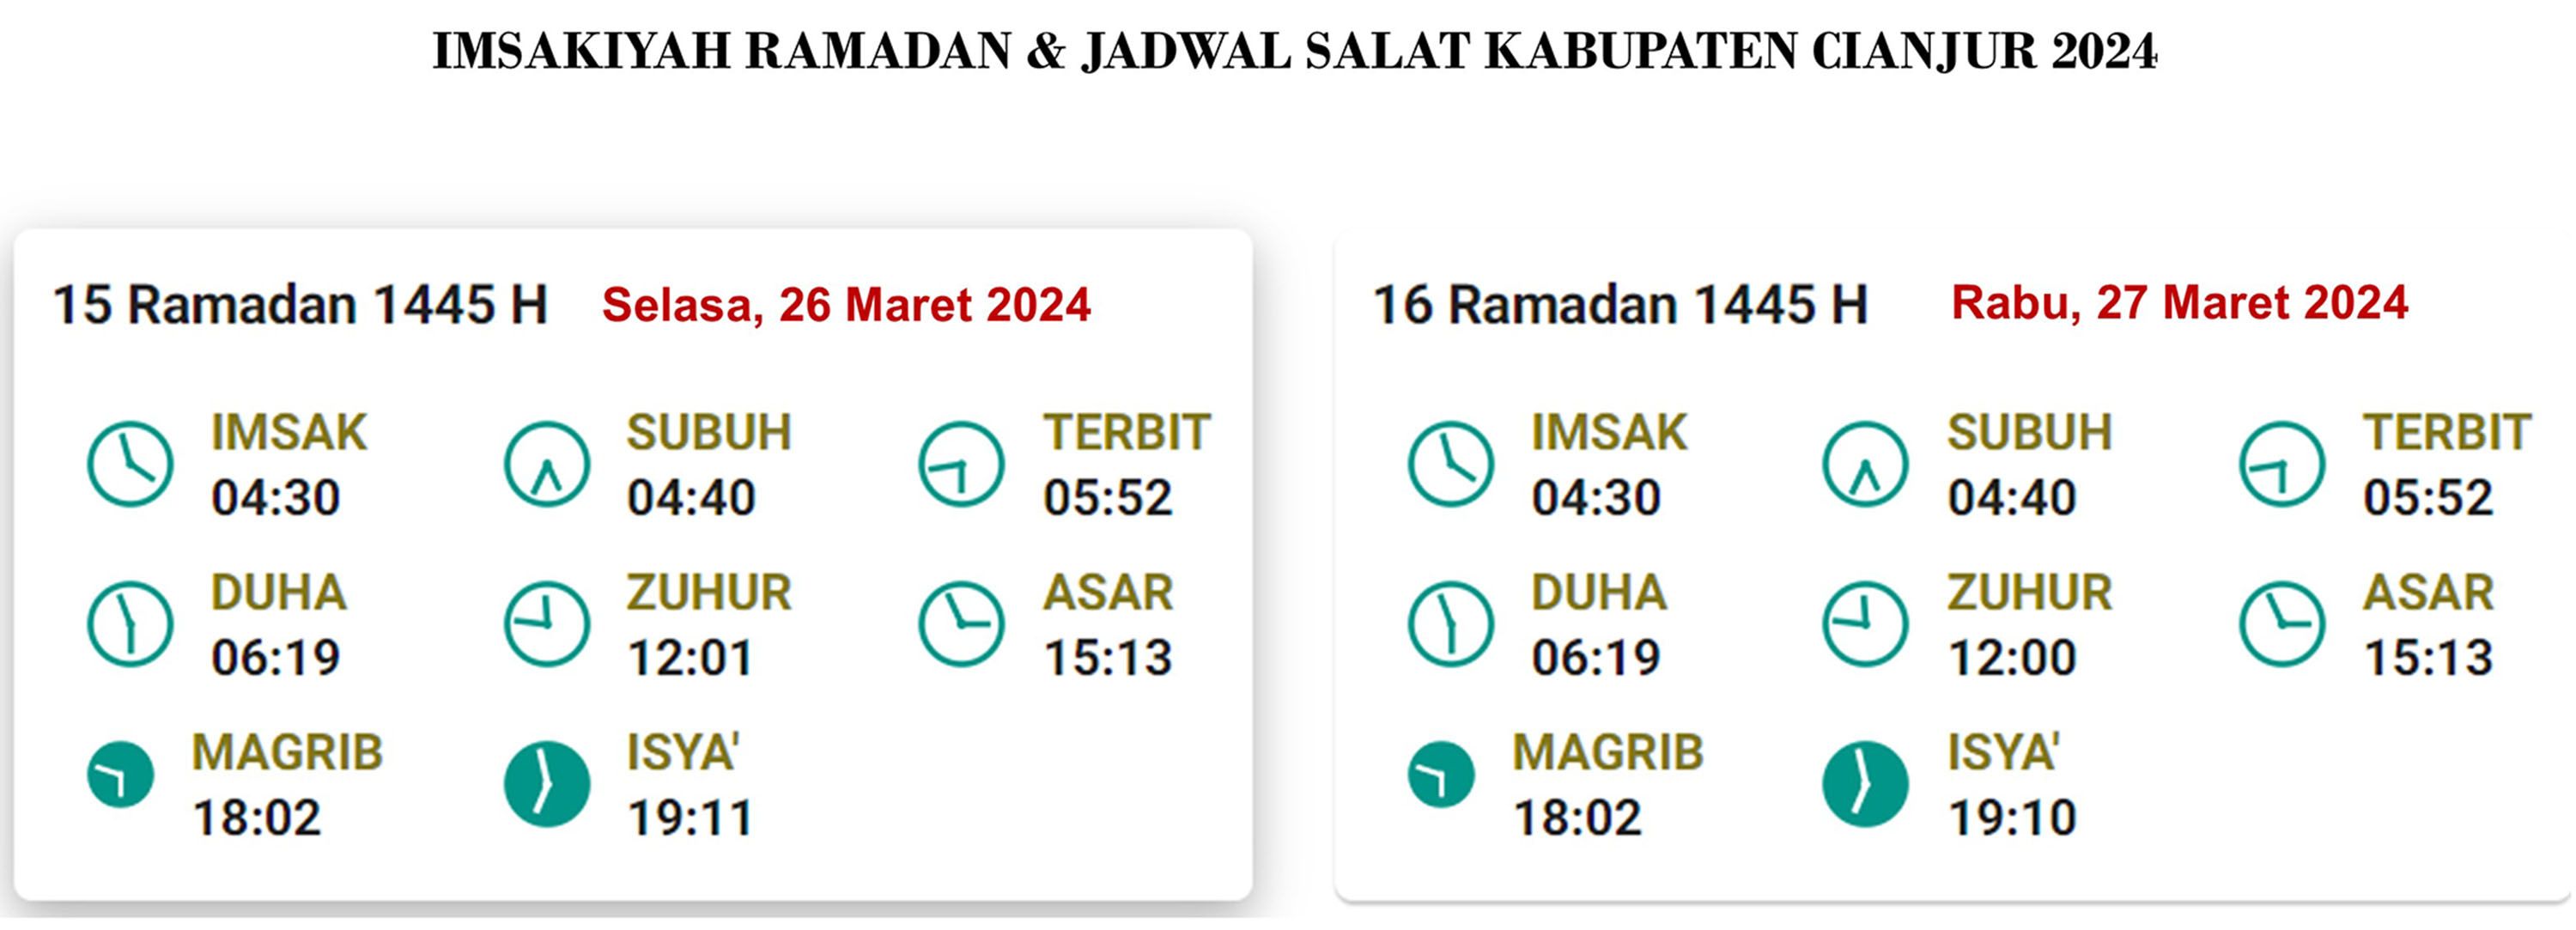 Cianjur, Jadwal Imsakiyah dan Salat, Selasa, 26 Maret 2024 